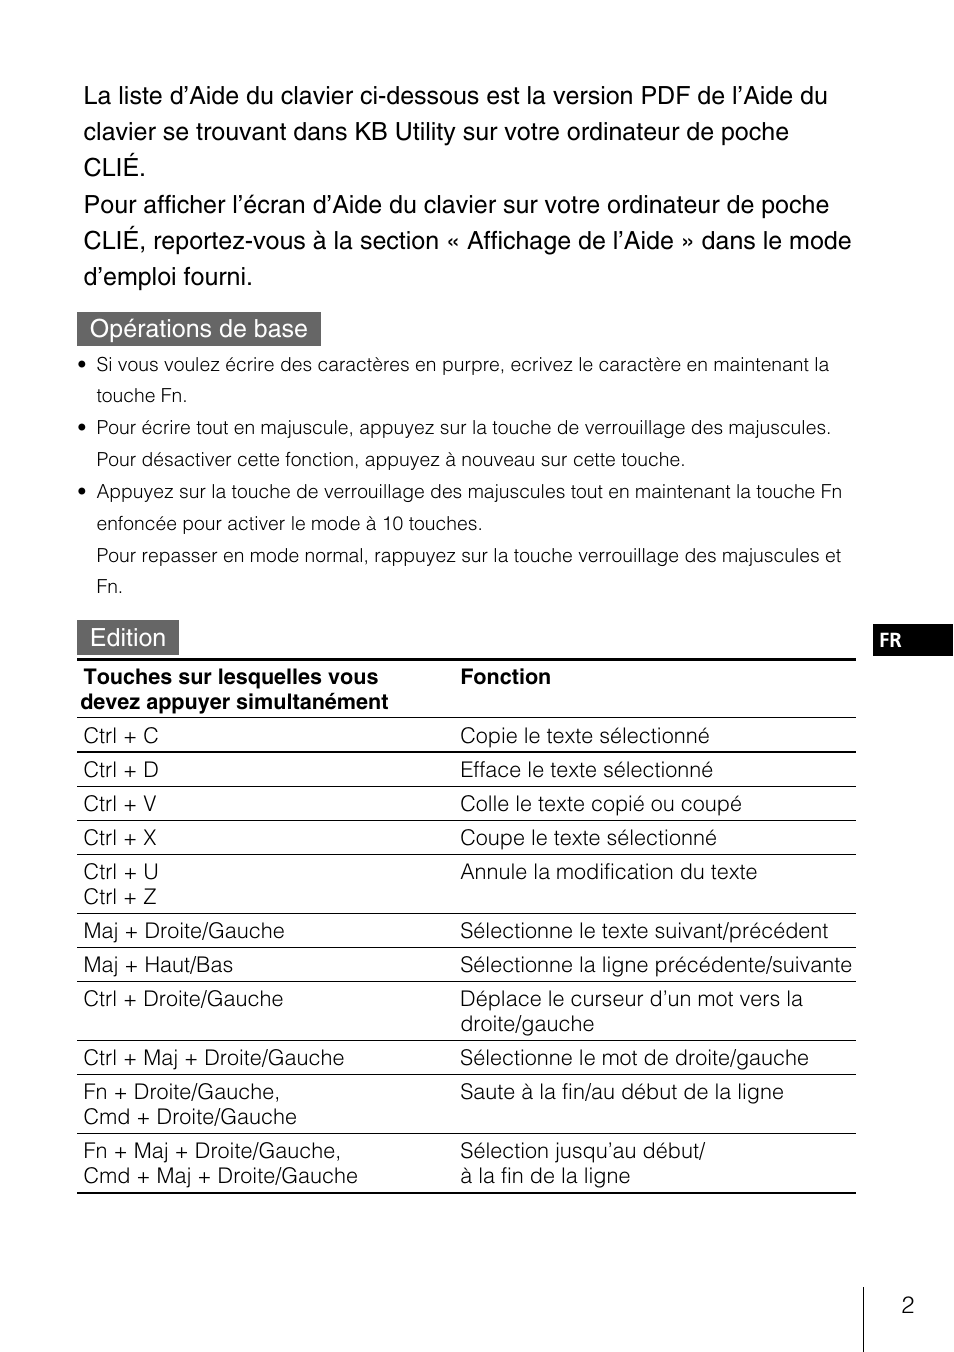 Operations de base, Edition, Liste d’aide du clavier | Sony PEGA-KB100 User Manual | Page 12 / 24